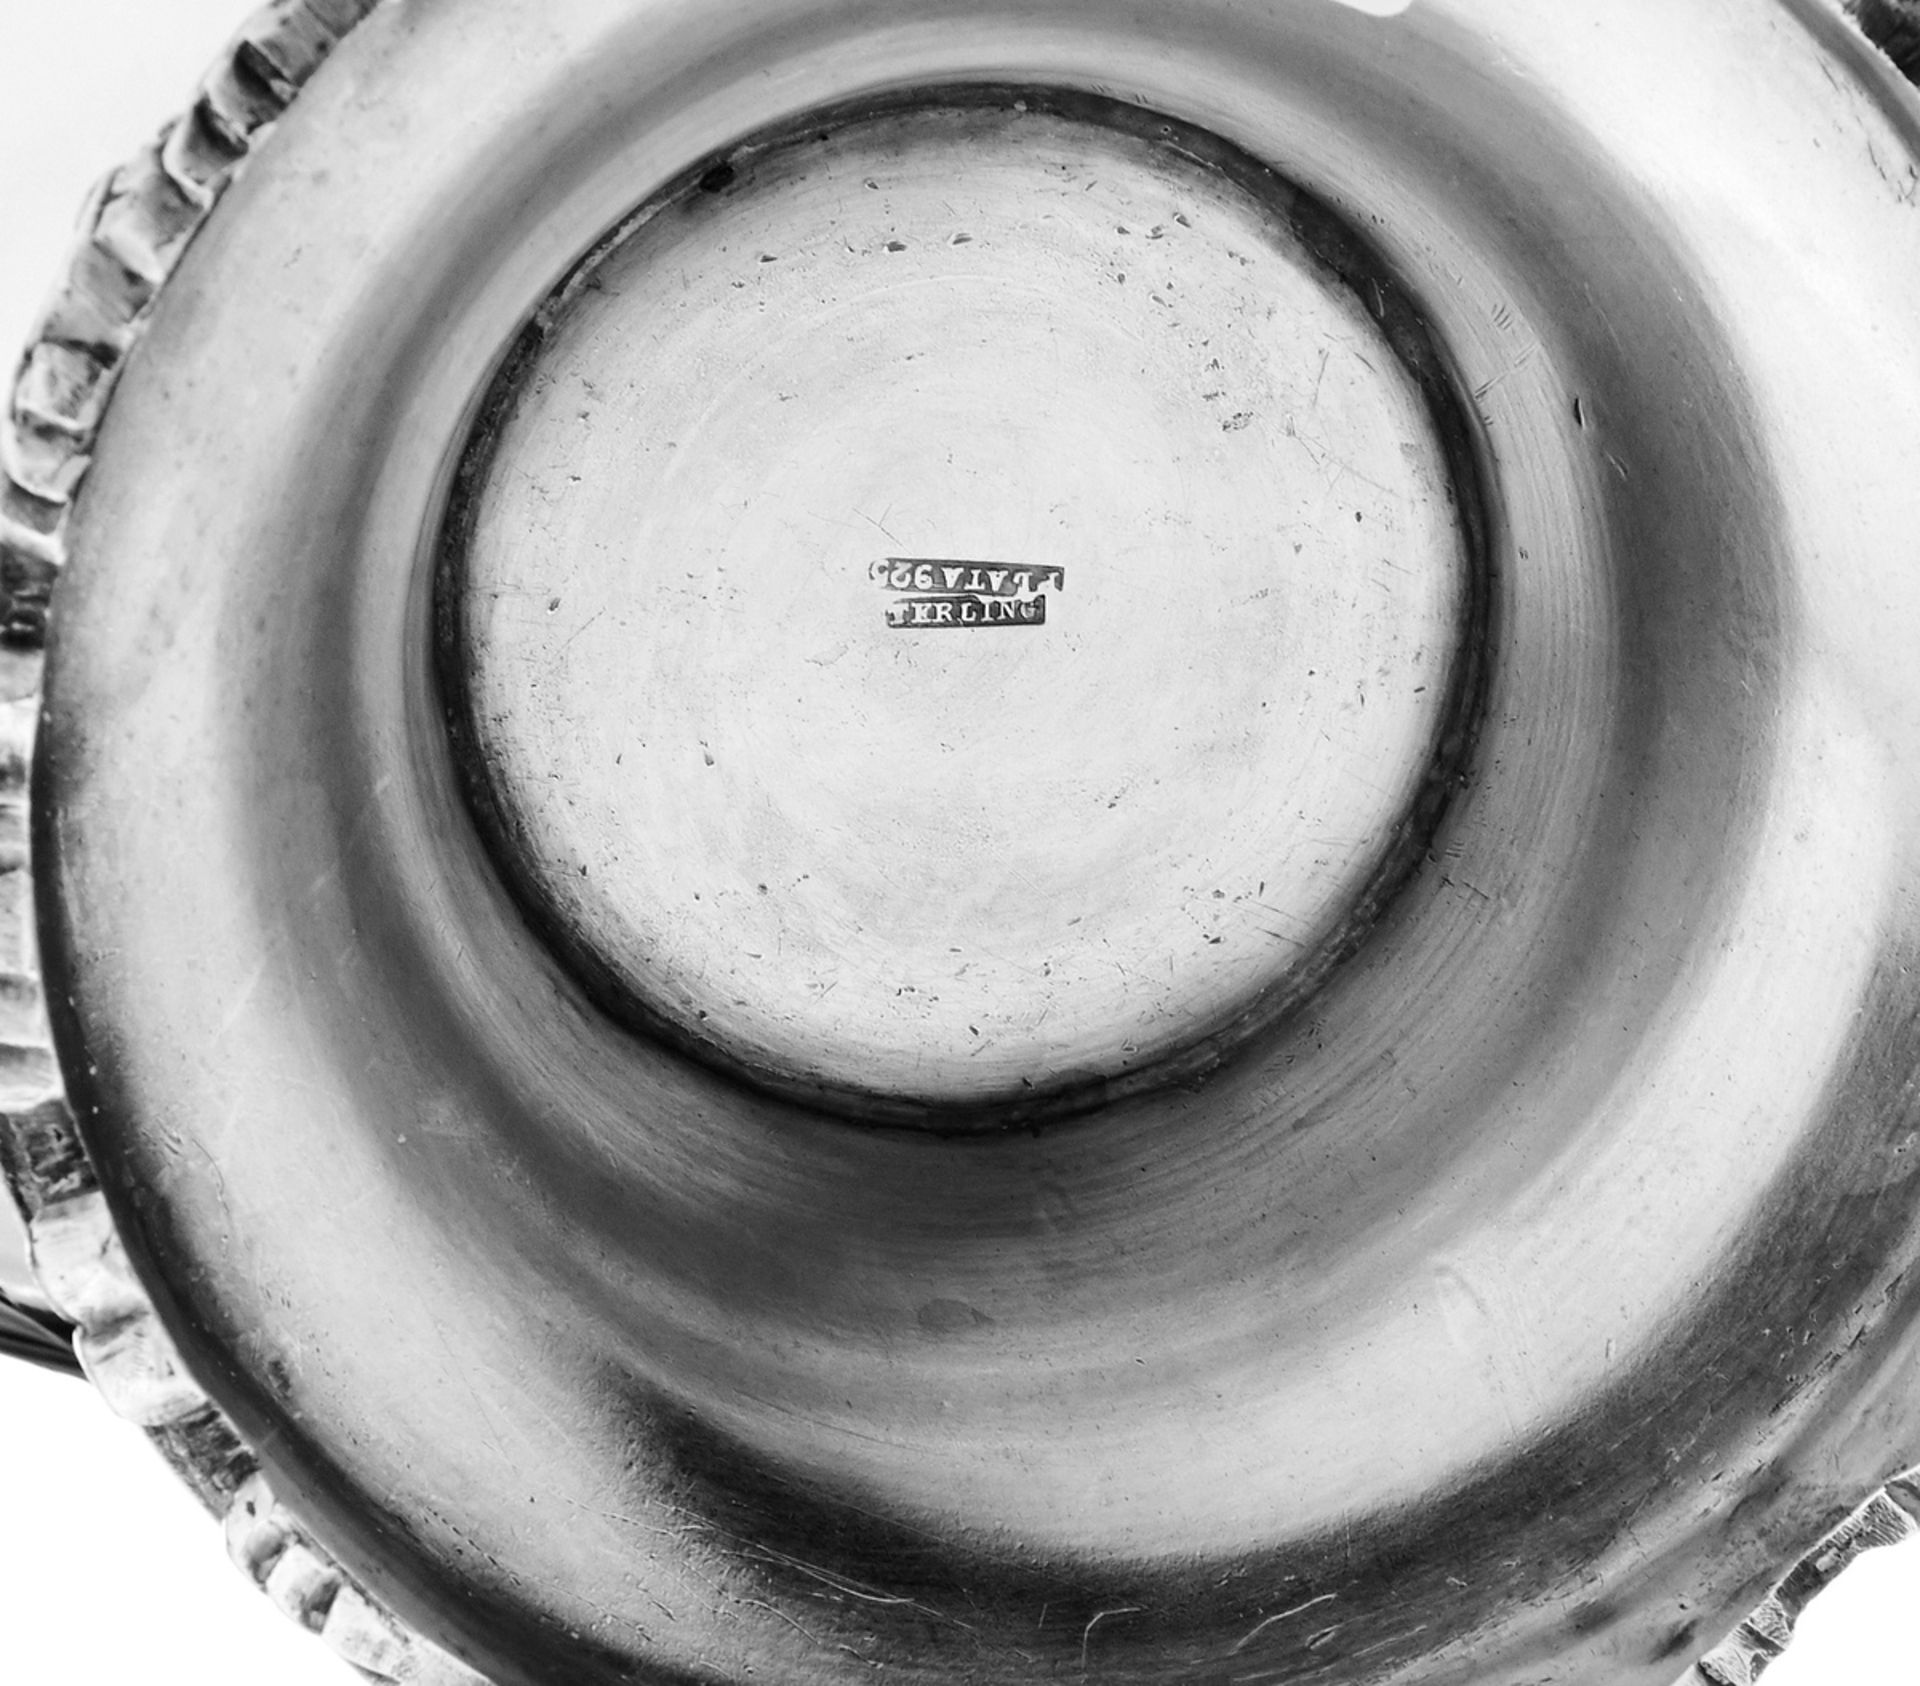 WasserkanneMexiko, Mitte 20. Jh. Silber gedrückt, getrieben, gegossen. Punziert. Höhe 31 cm - Bild 2 aus 2